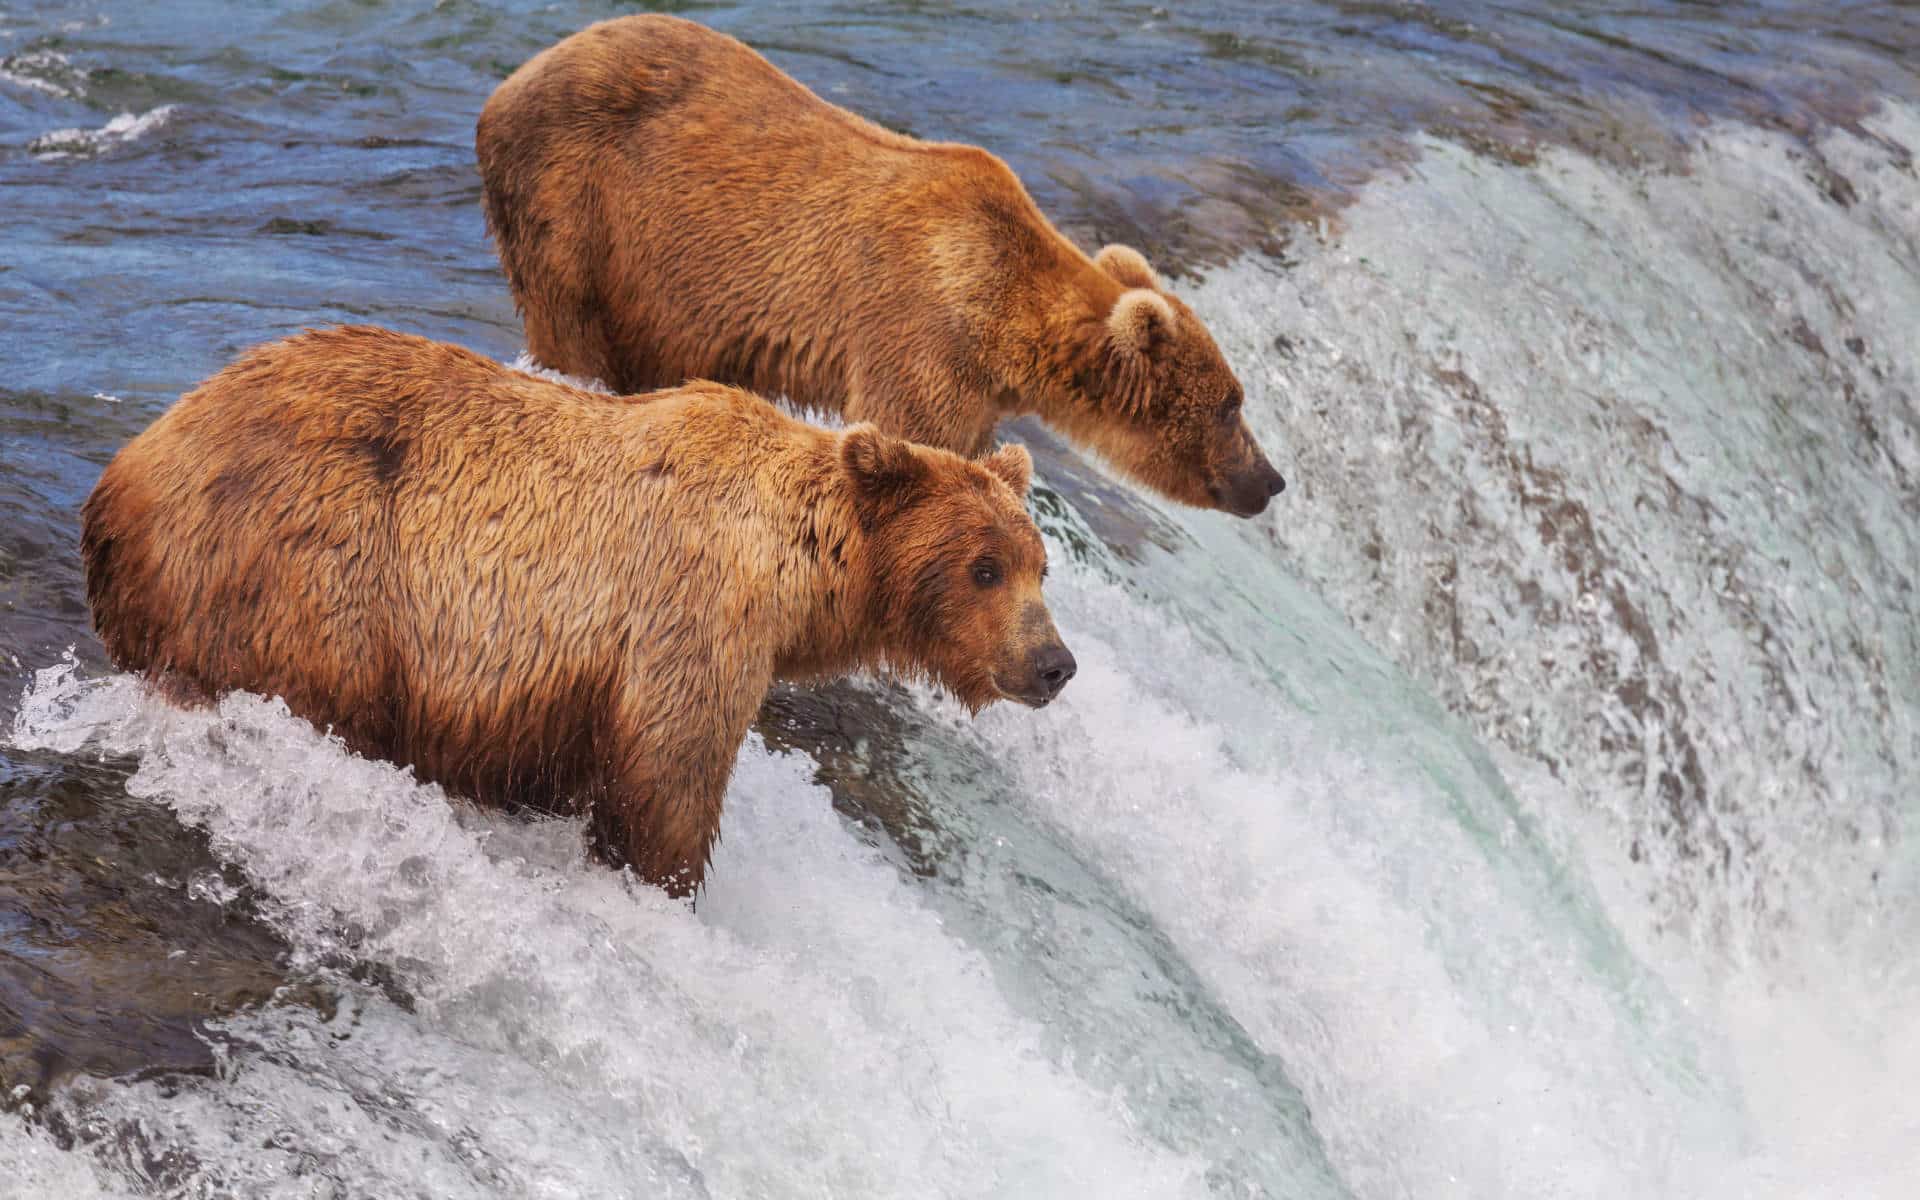 Bears wait to catch salmon in Alaska.